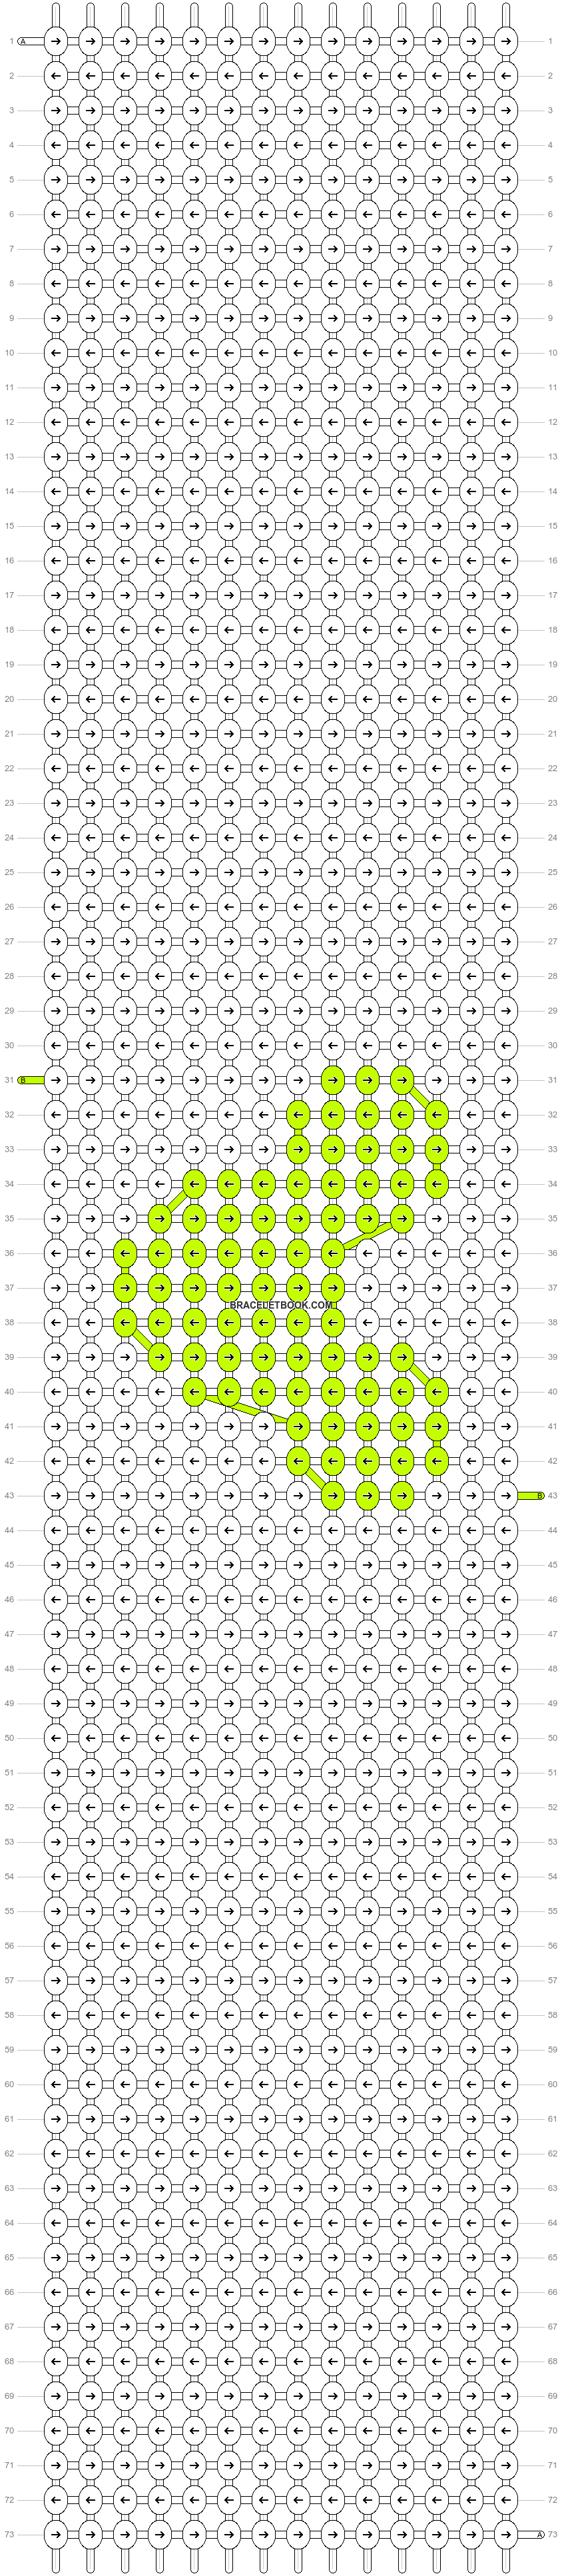 Alpha pattern #54139 variation #92355 pattern